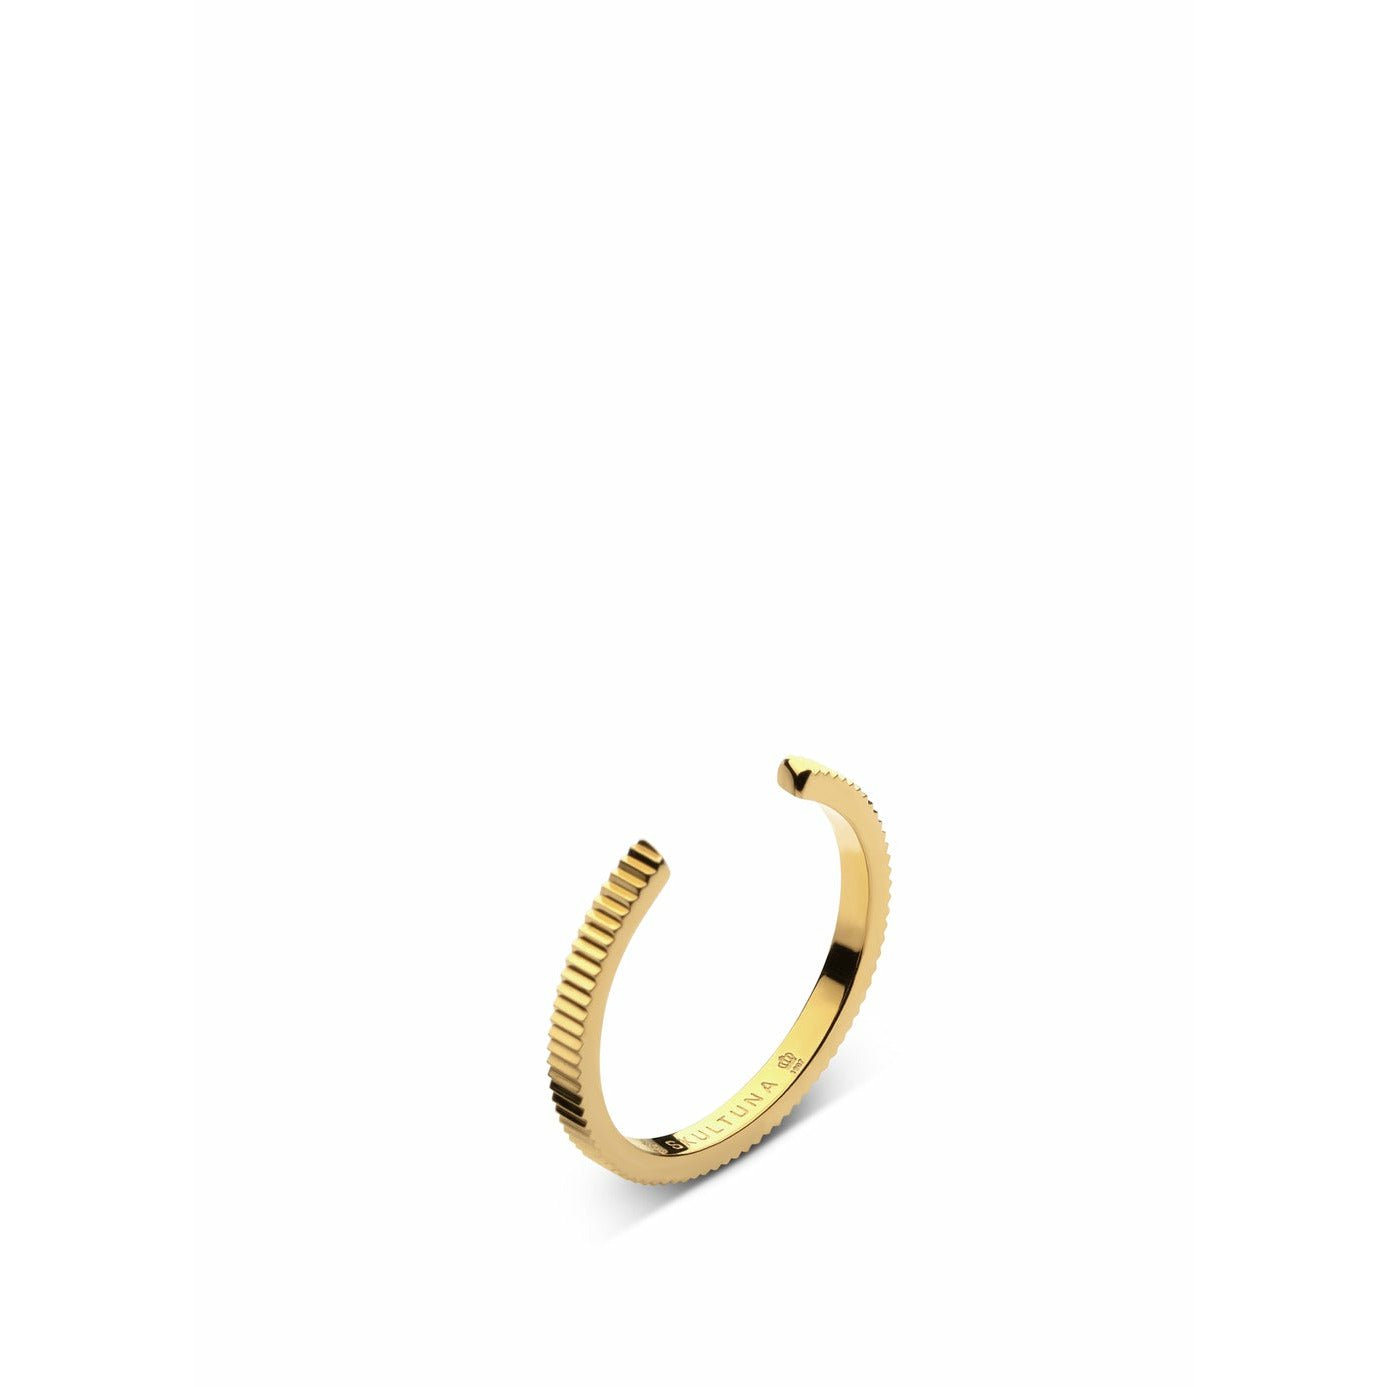 Skultuna žebrované tenké prsten malé 316 l ocelové zlaté pokovené, Ø1,6 cm